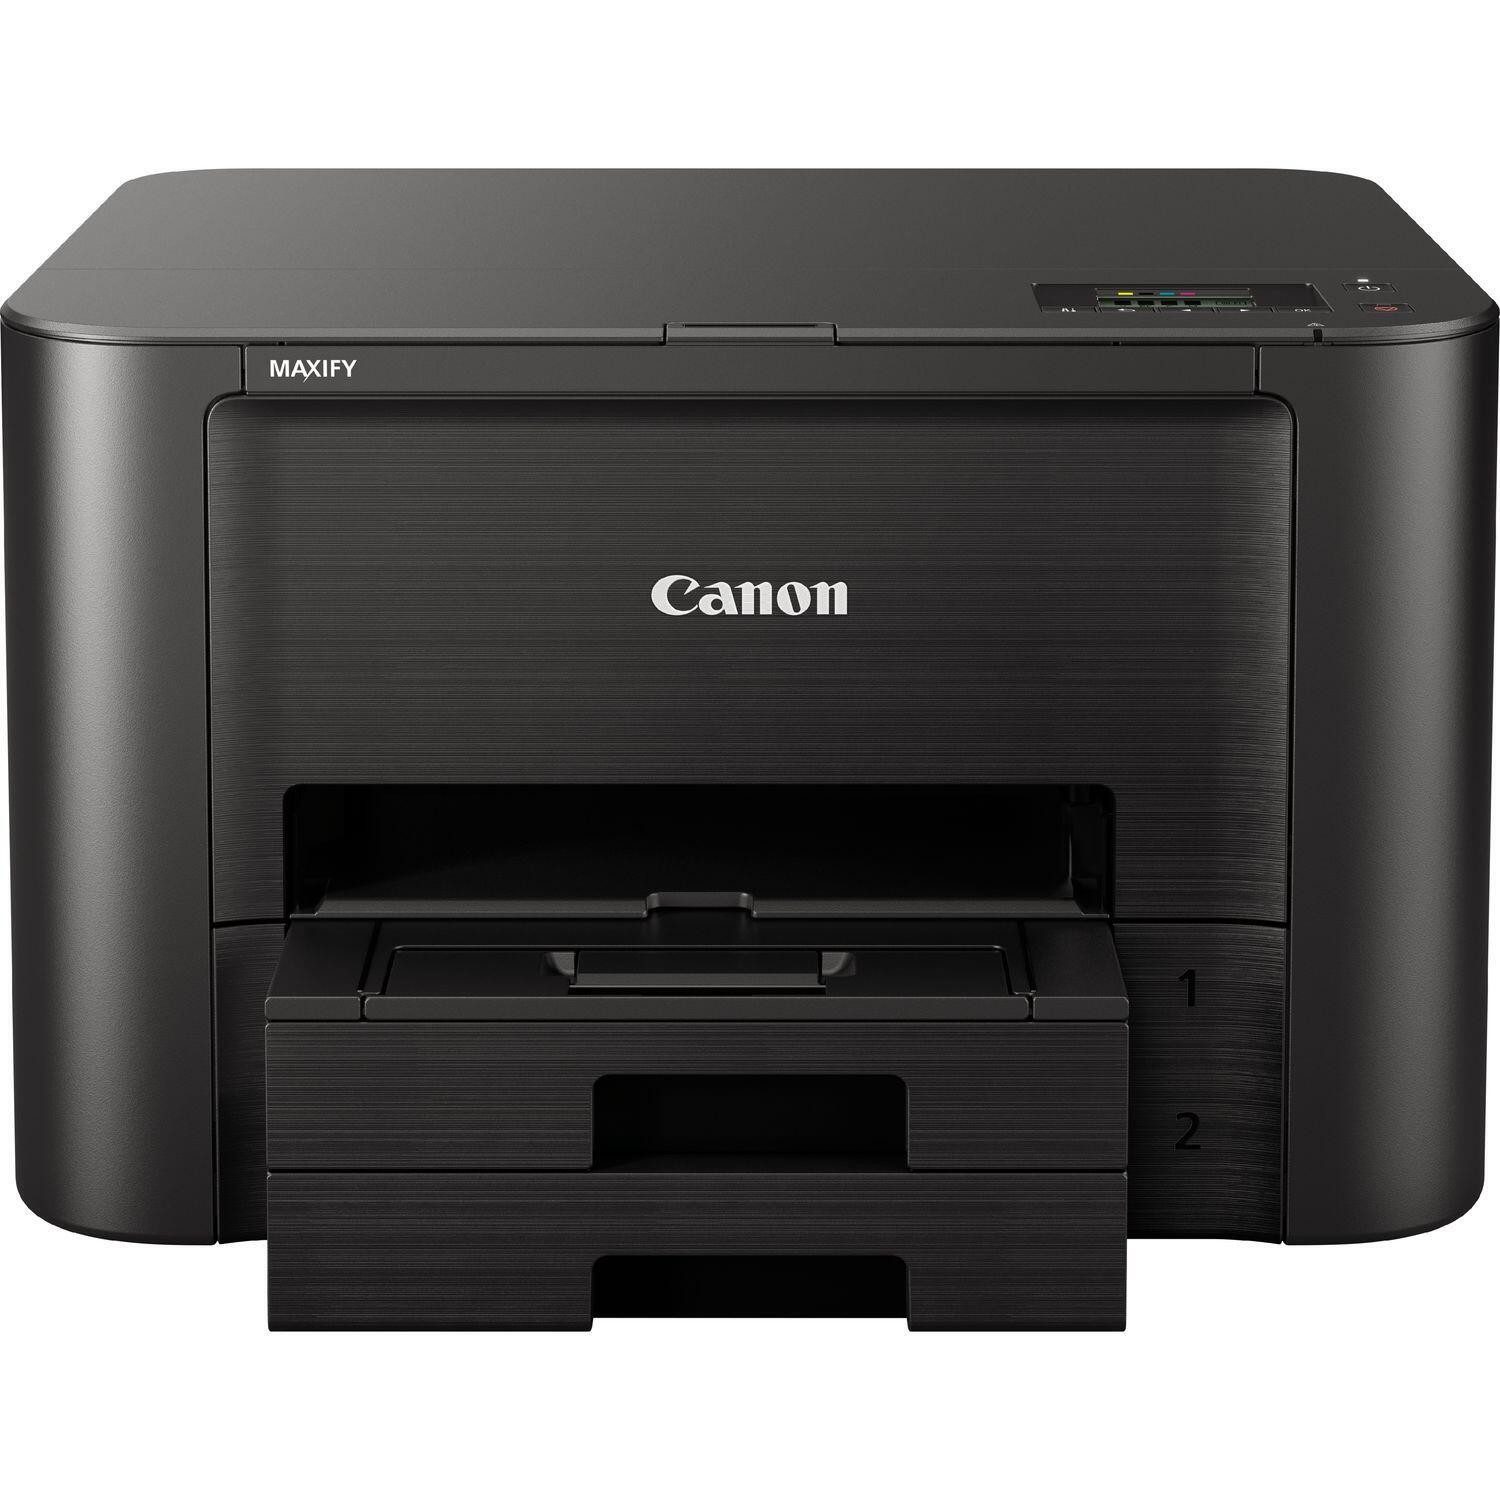 Canon Canon MAXIFY iB4150 Tintenstrahldrucker, (WLAN, Automatischer Duplexdruck)